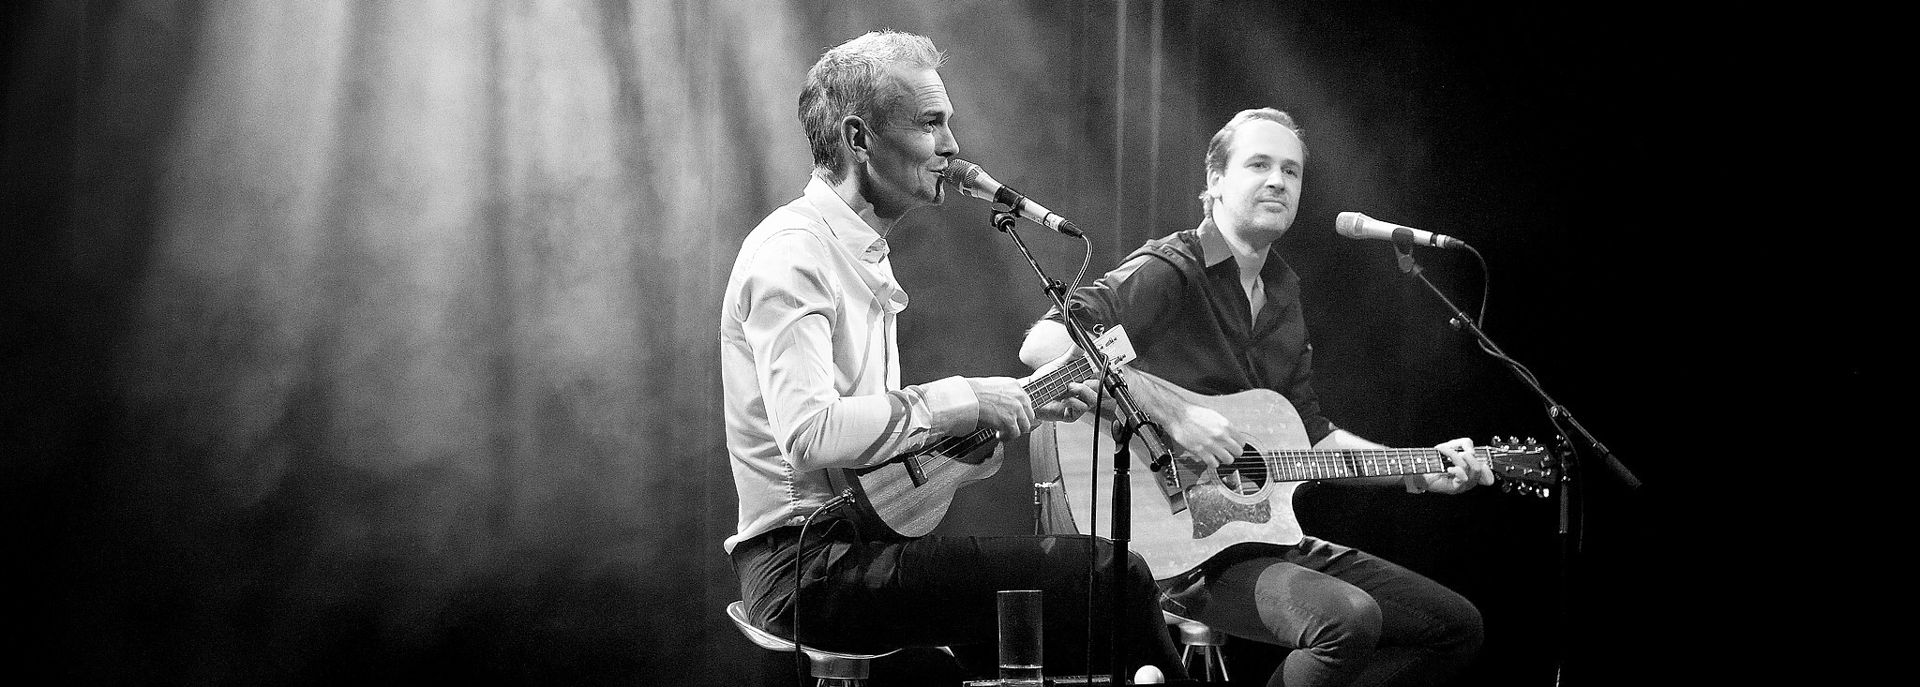 Simon & Garfunkel acoustic